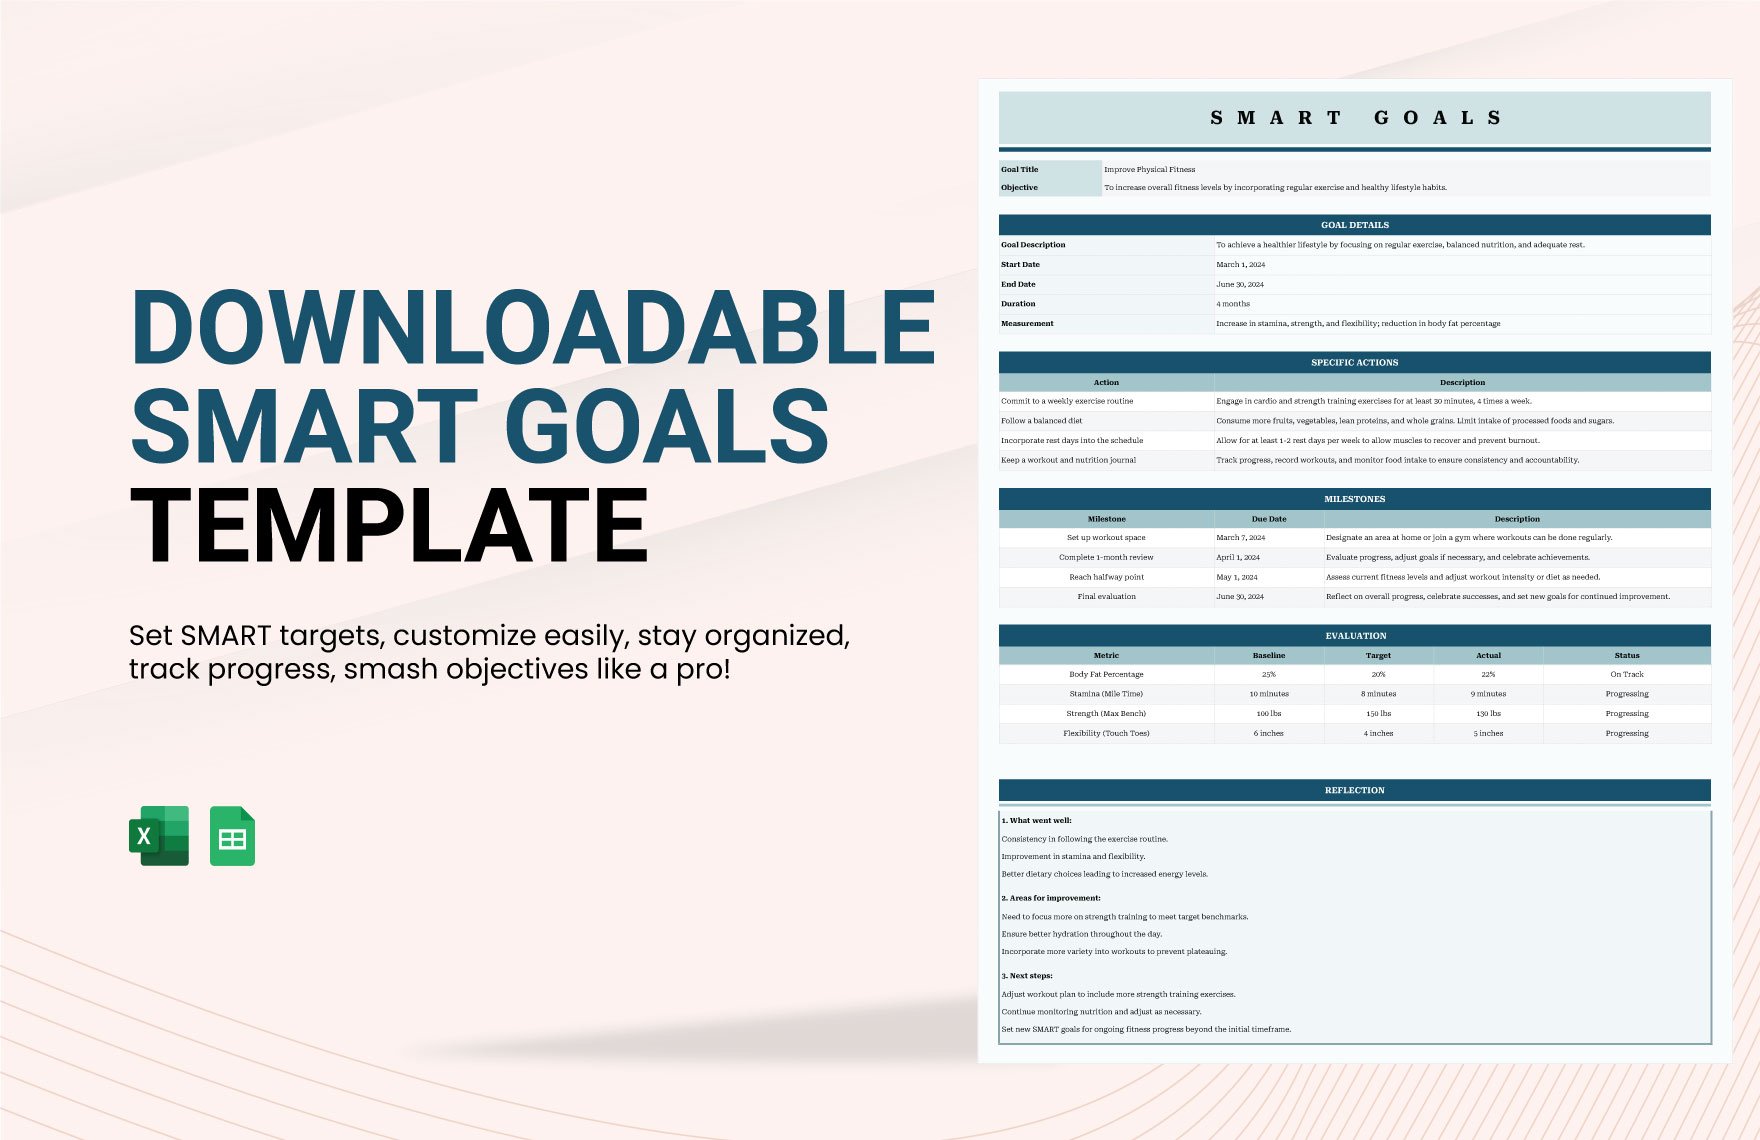 Downloadable Smart Goals Template in Excel, Google Sheets